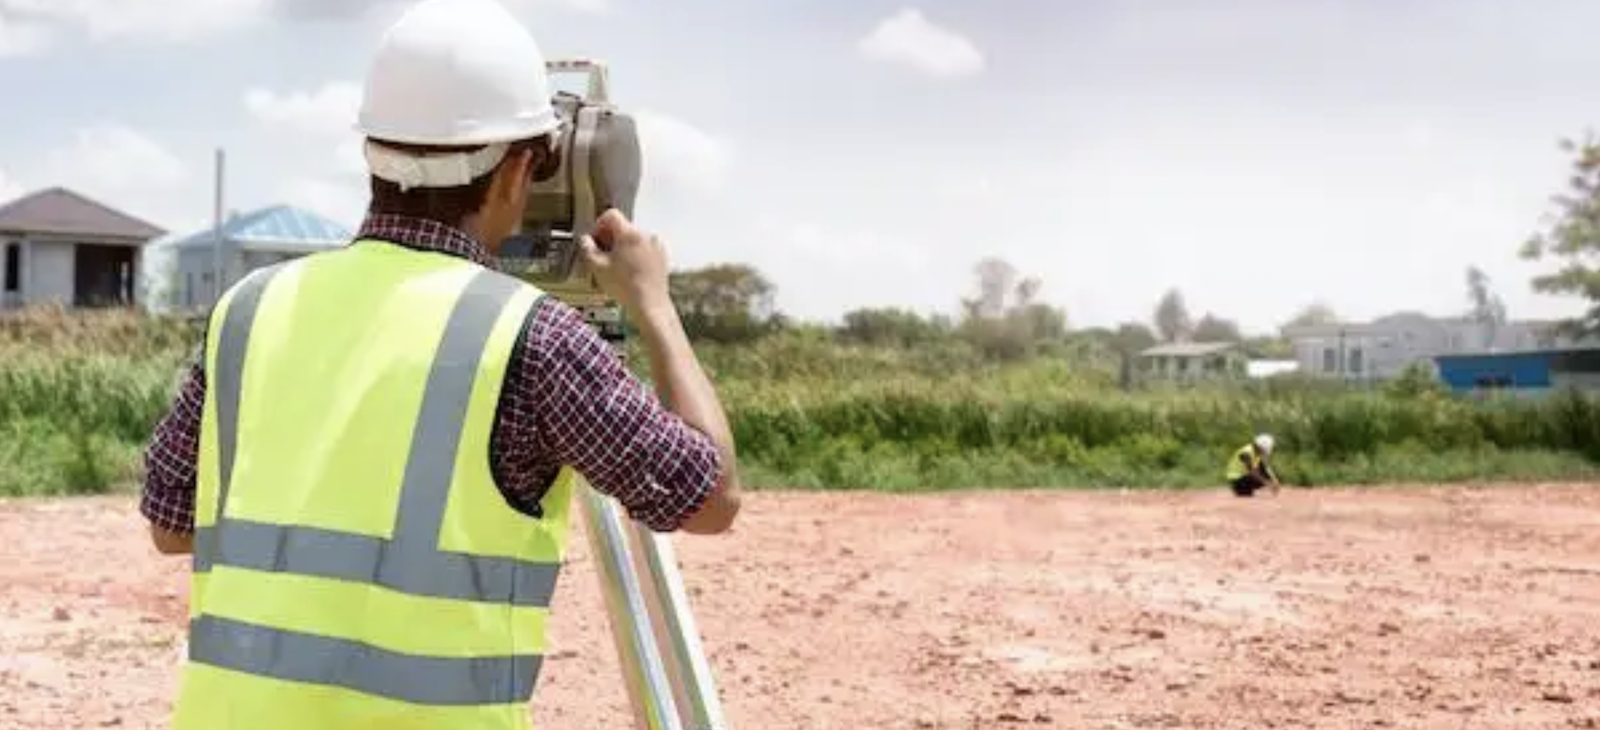 Surveyor surveying land for home builder acquisition and development